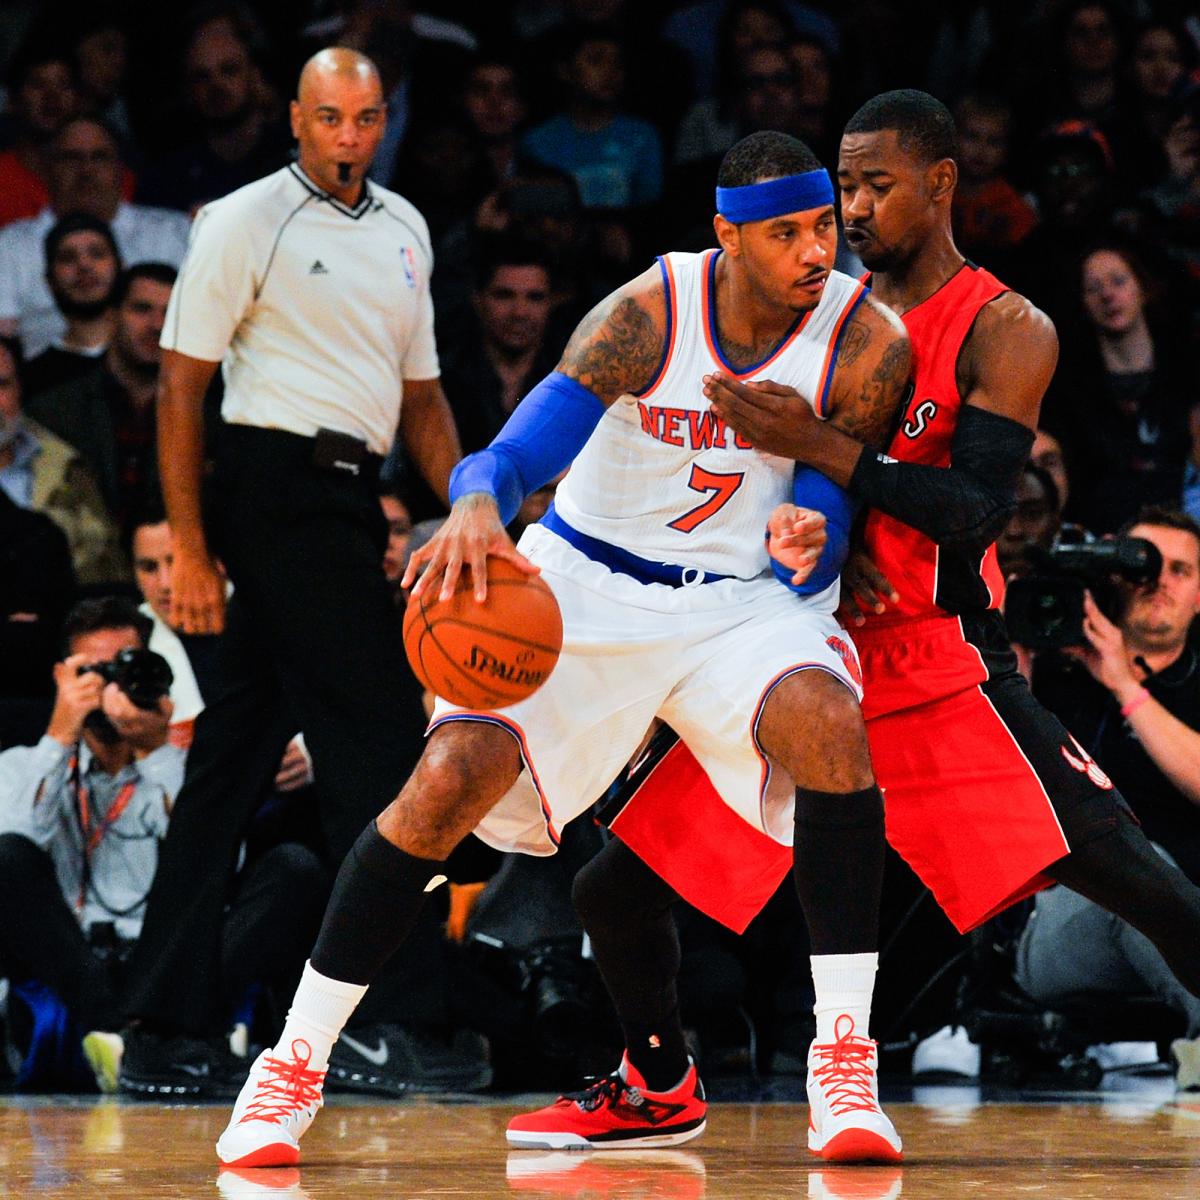 Toronto Raptors vs. New York Knicks Live Score, Highlights and